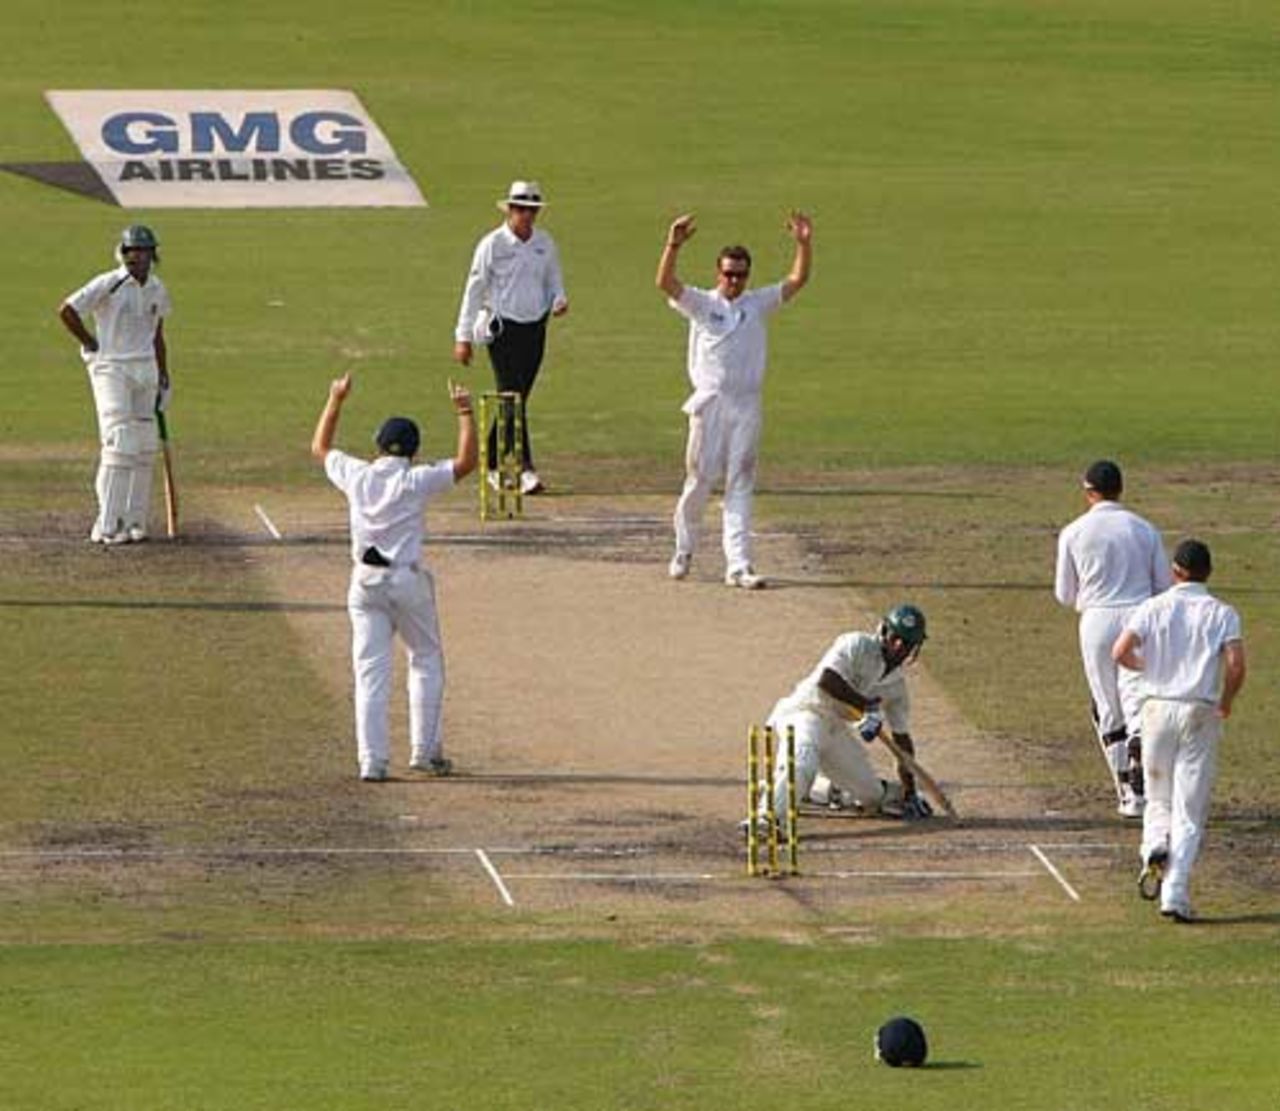 Graeme Swann again made important breakthroughs for England, Bangladesh v England, 2nd Test, Dhaka, March 23, 2010